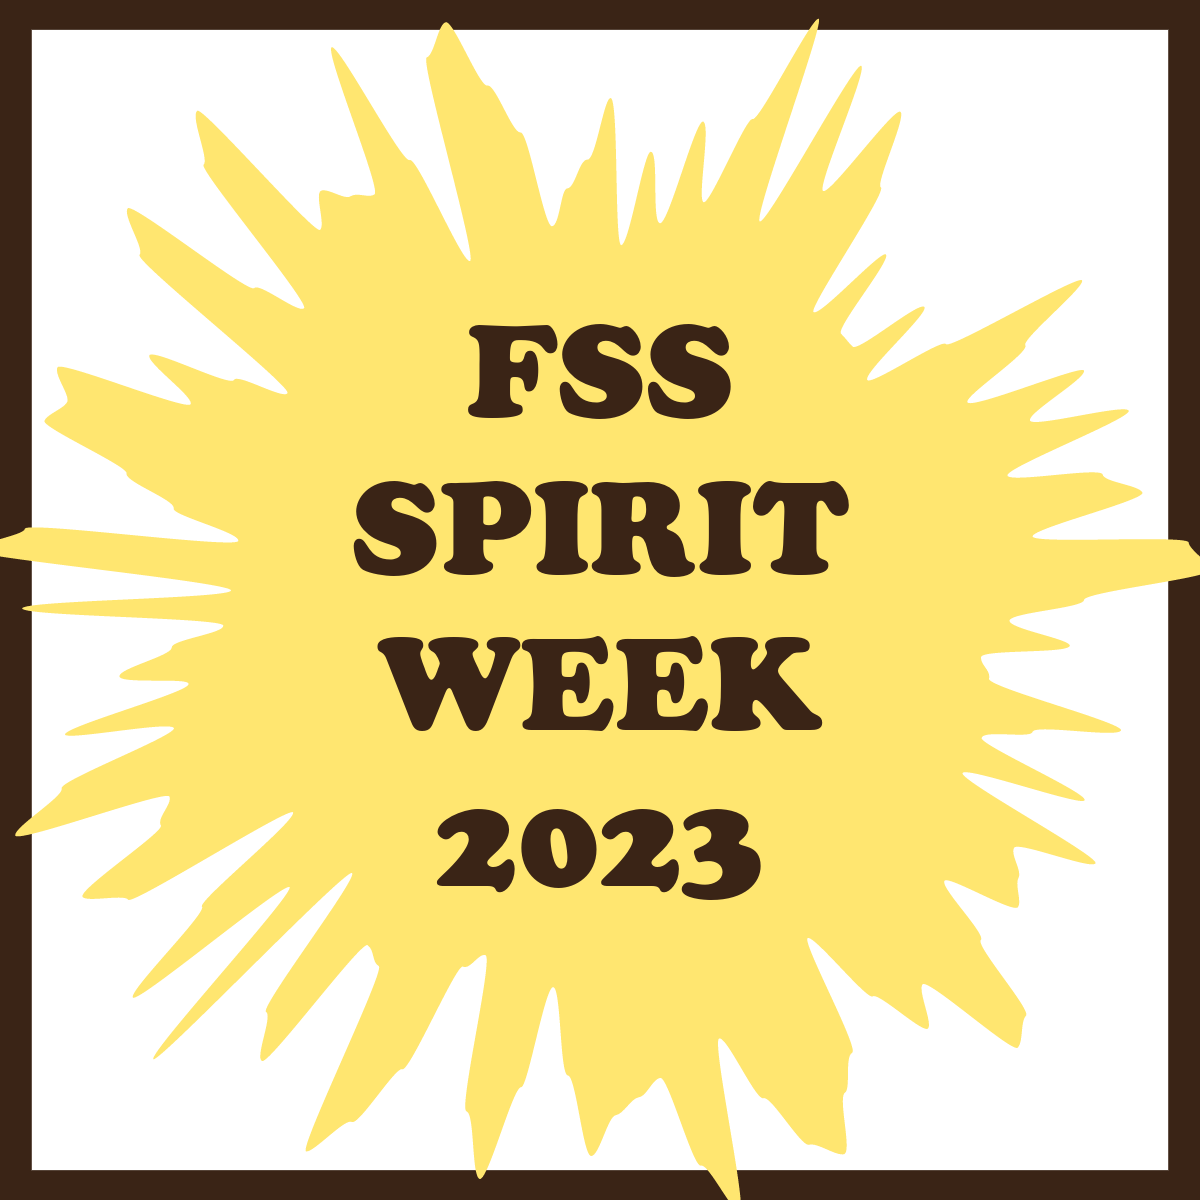 Bringing Together the Upper School Through Upcoming Spirit Week